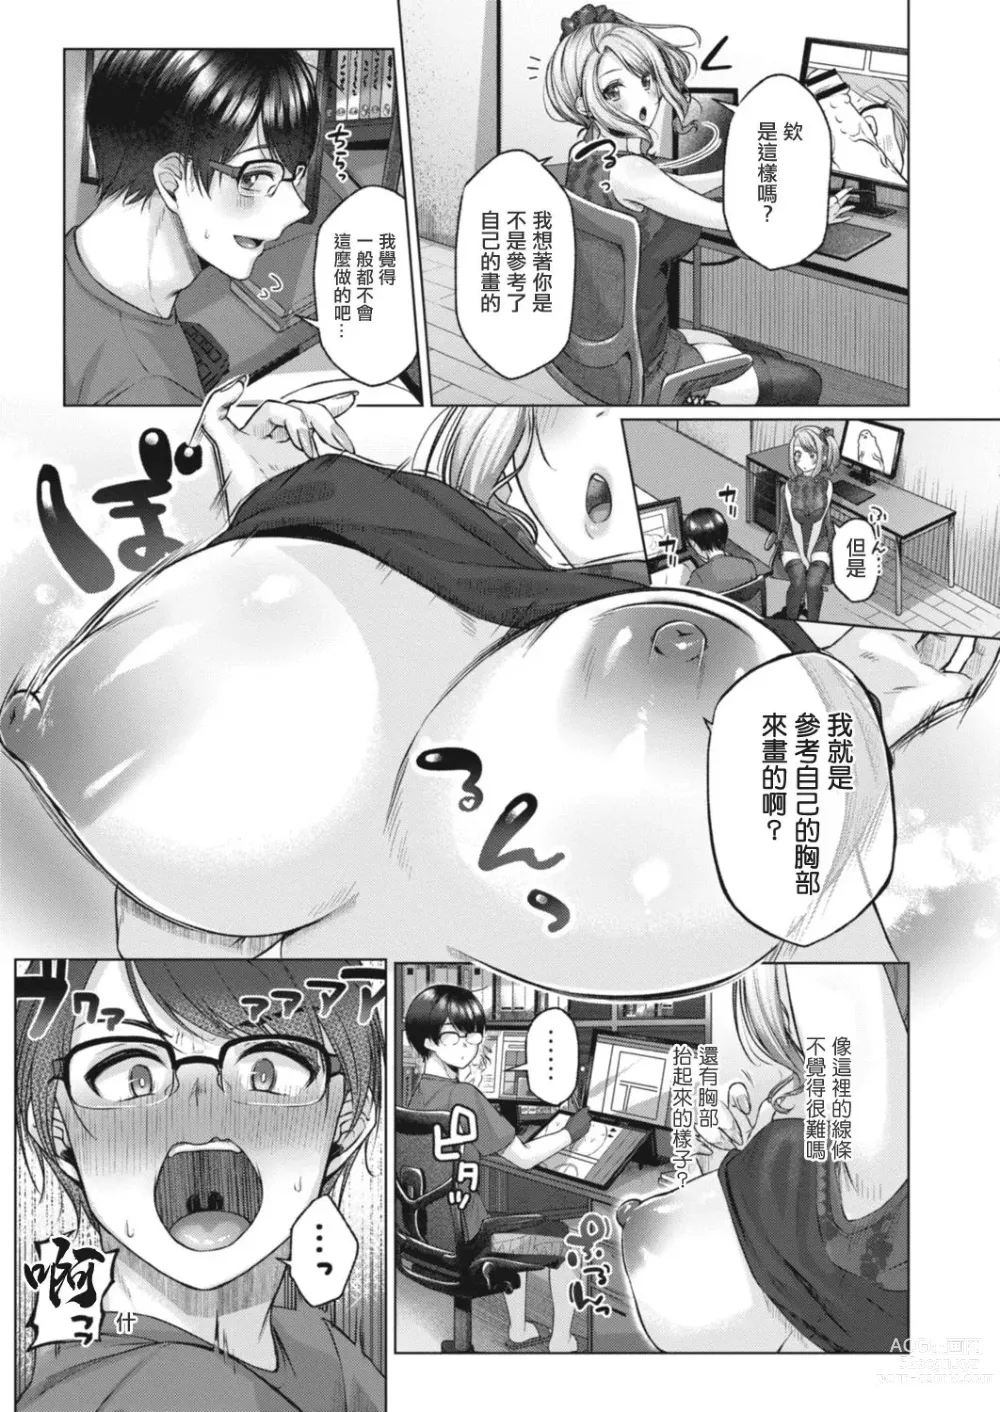 Page 5 of manga Gal Assi Coming